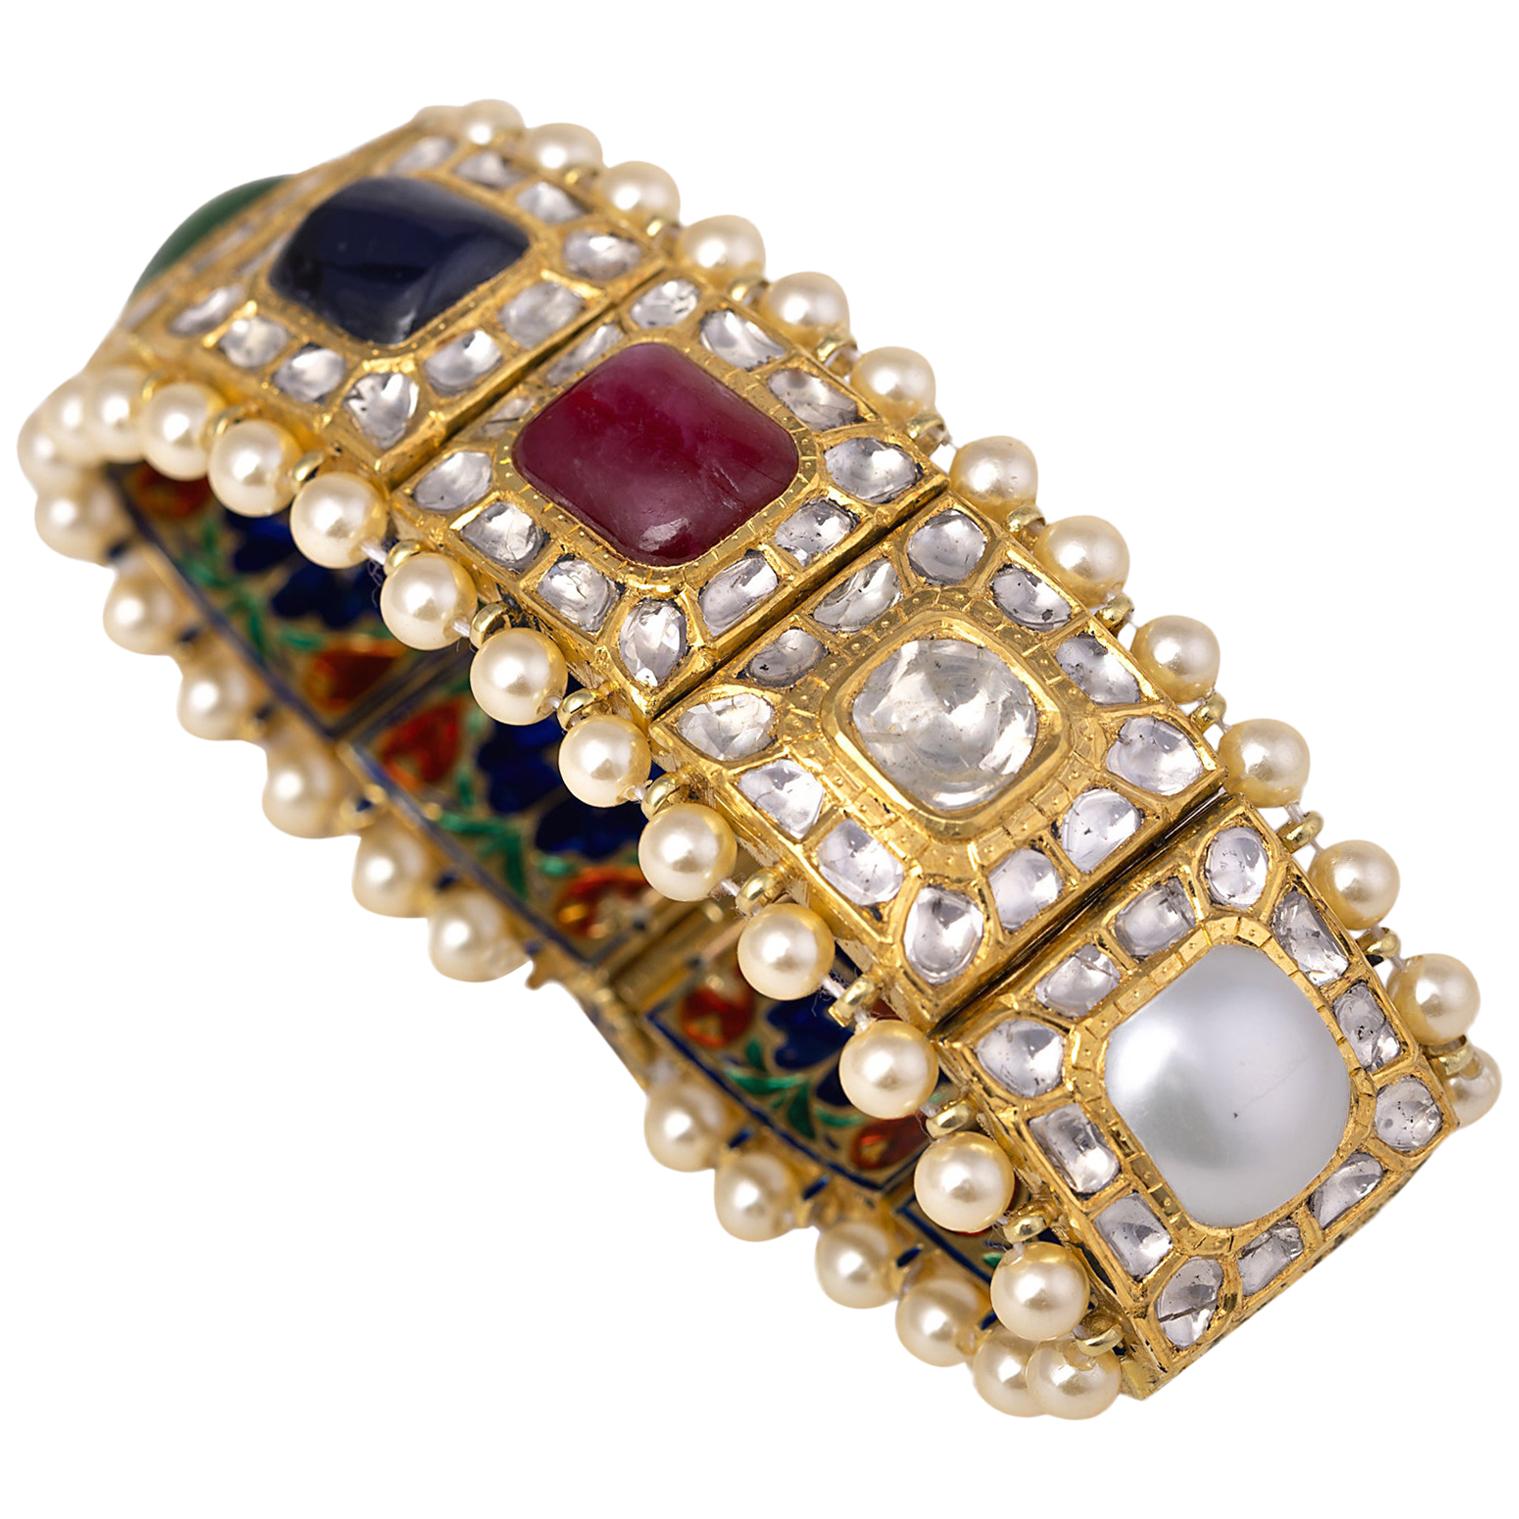 18 Karat Gold Nine Precious Gems Statement Handcrafted Bracelet with Enamel Work